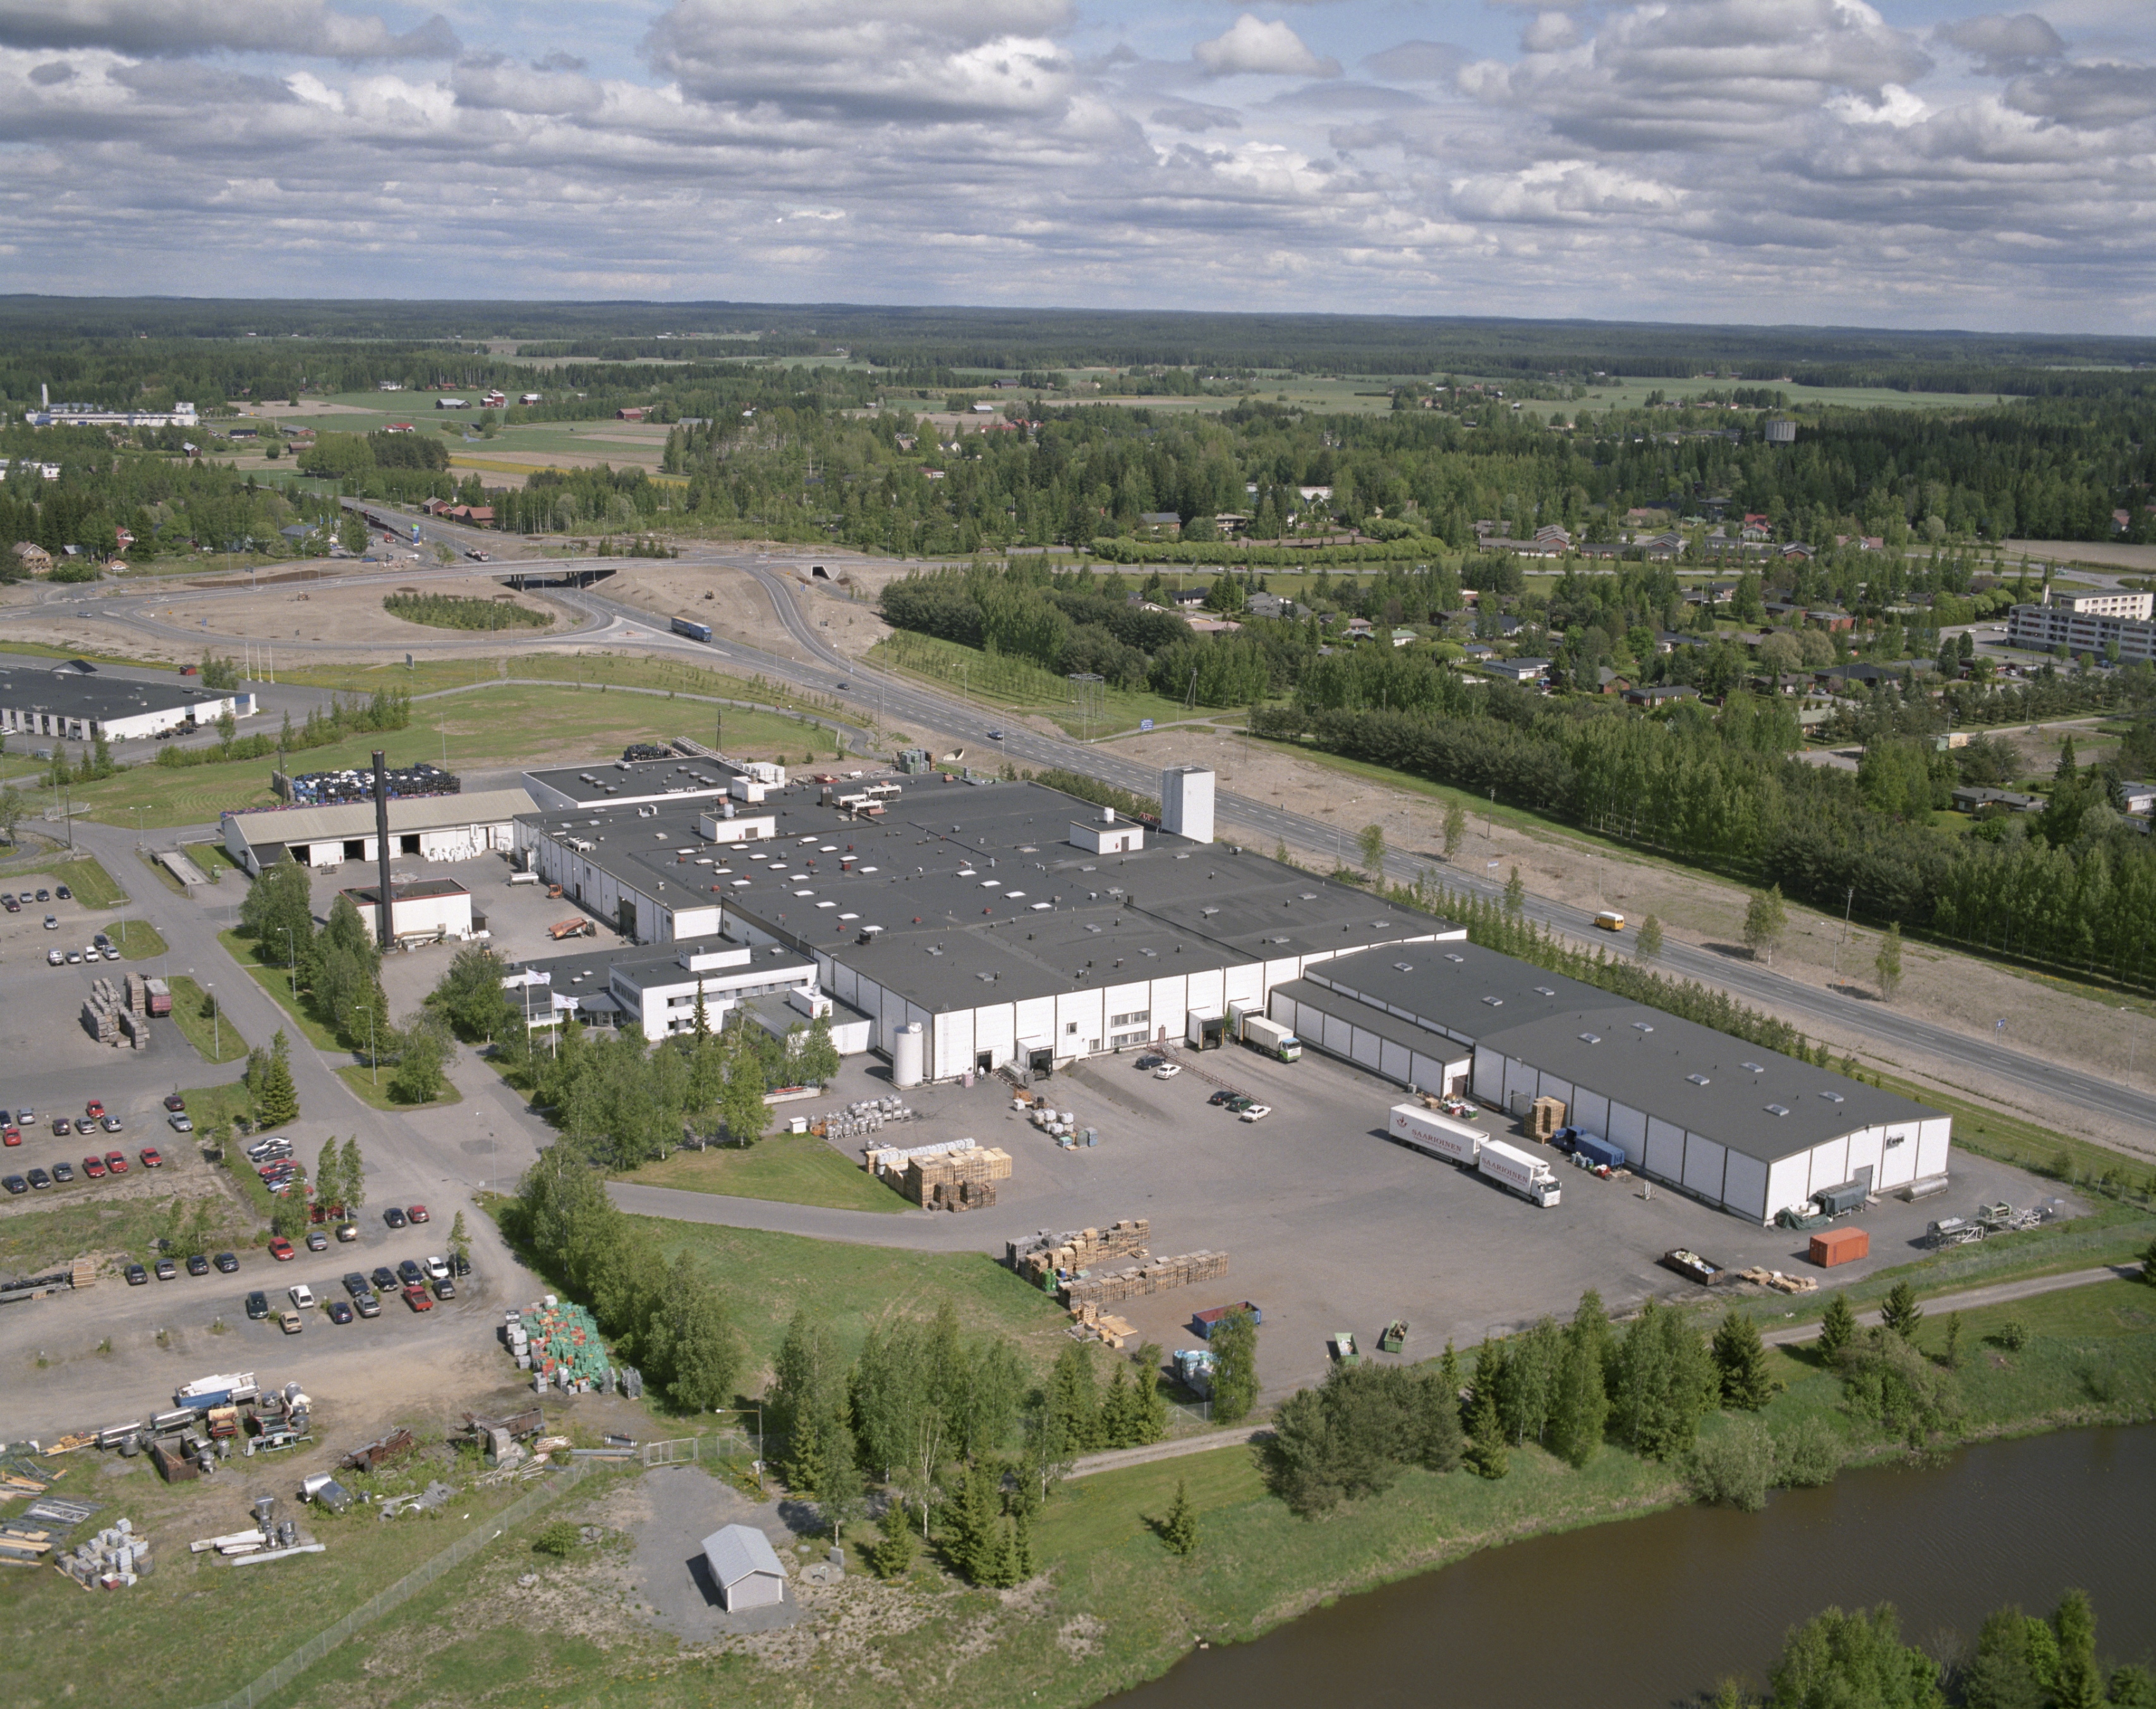 Saarioinen factory at Huittinen, Finland